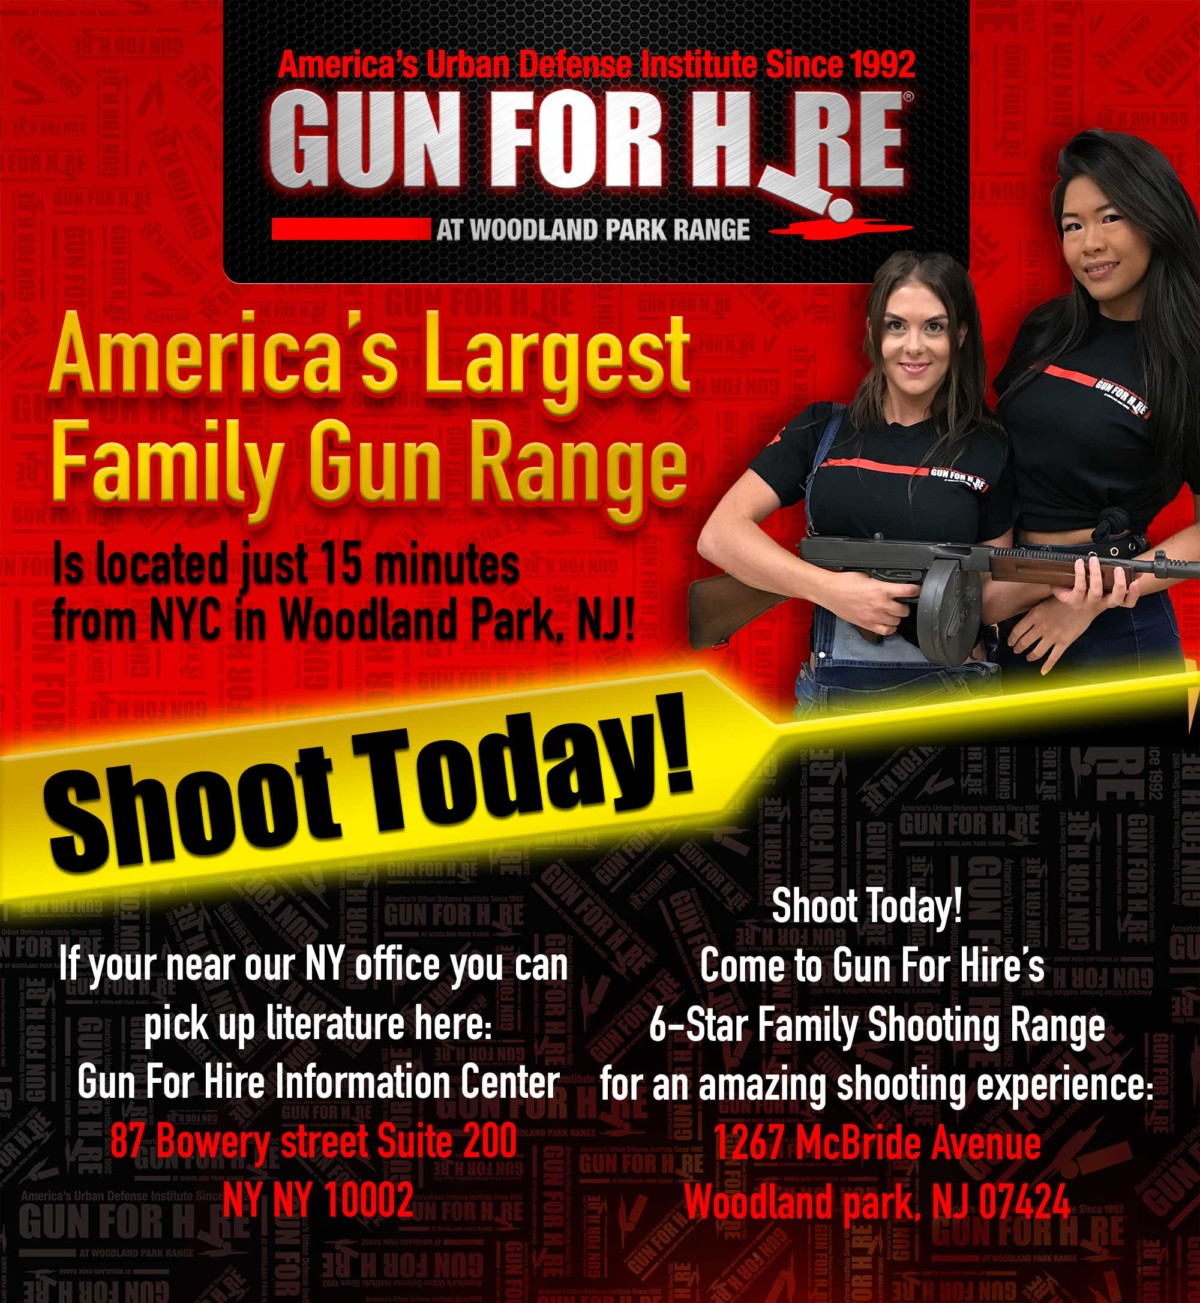 shooting-range-experience - Best Gun Range NYC and NJ Area ...